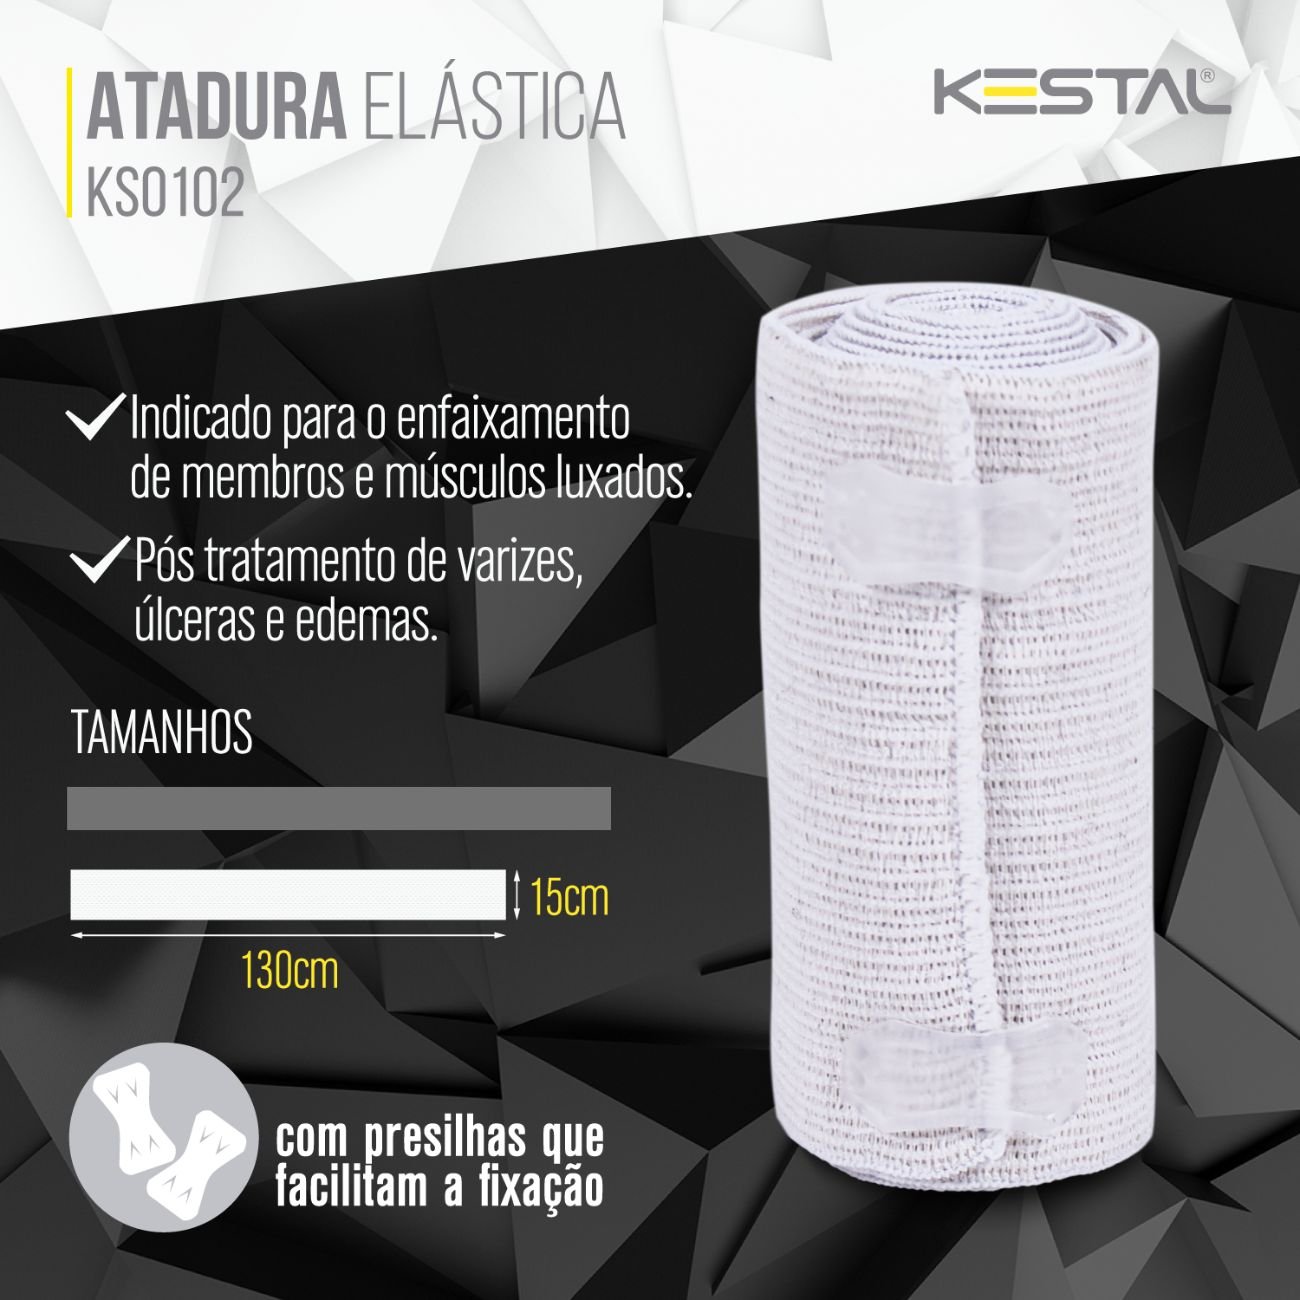 Atadura Elástica 15x130cm Kestal Pós tratamento de Varizes - 2